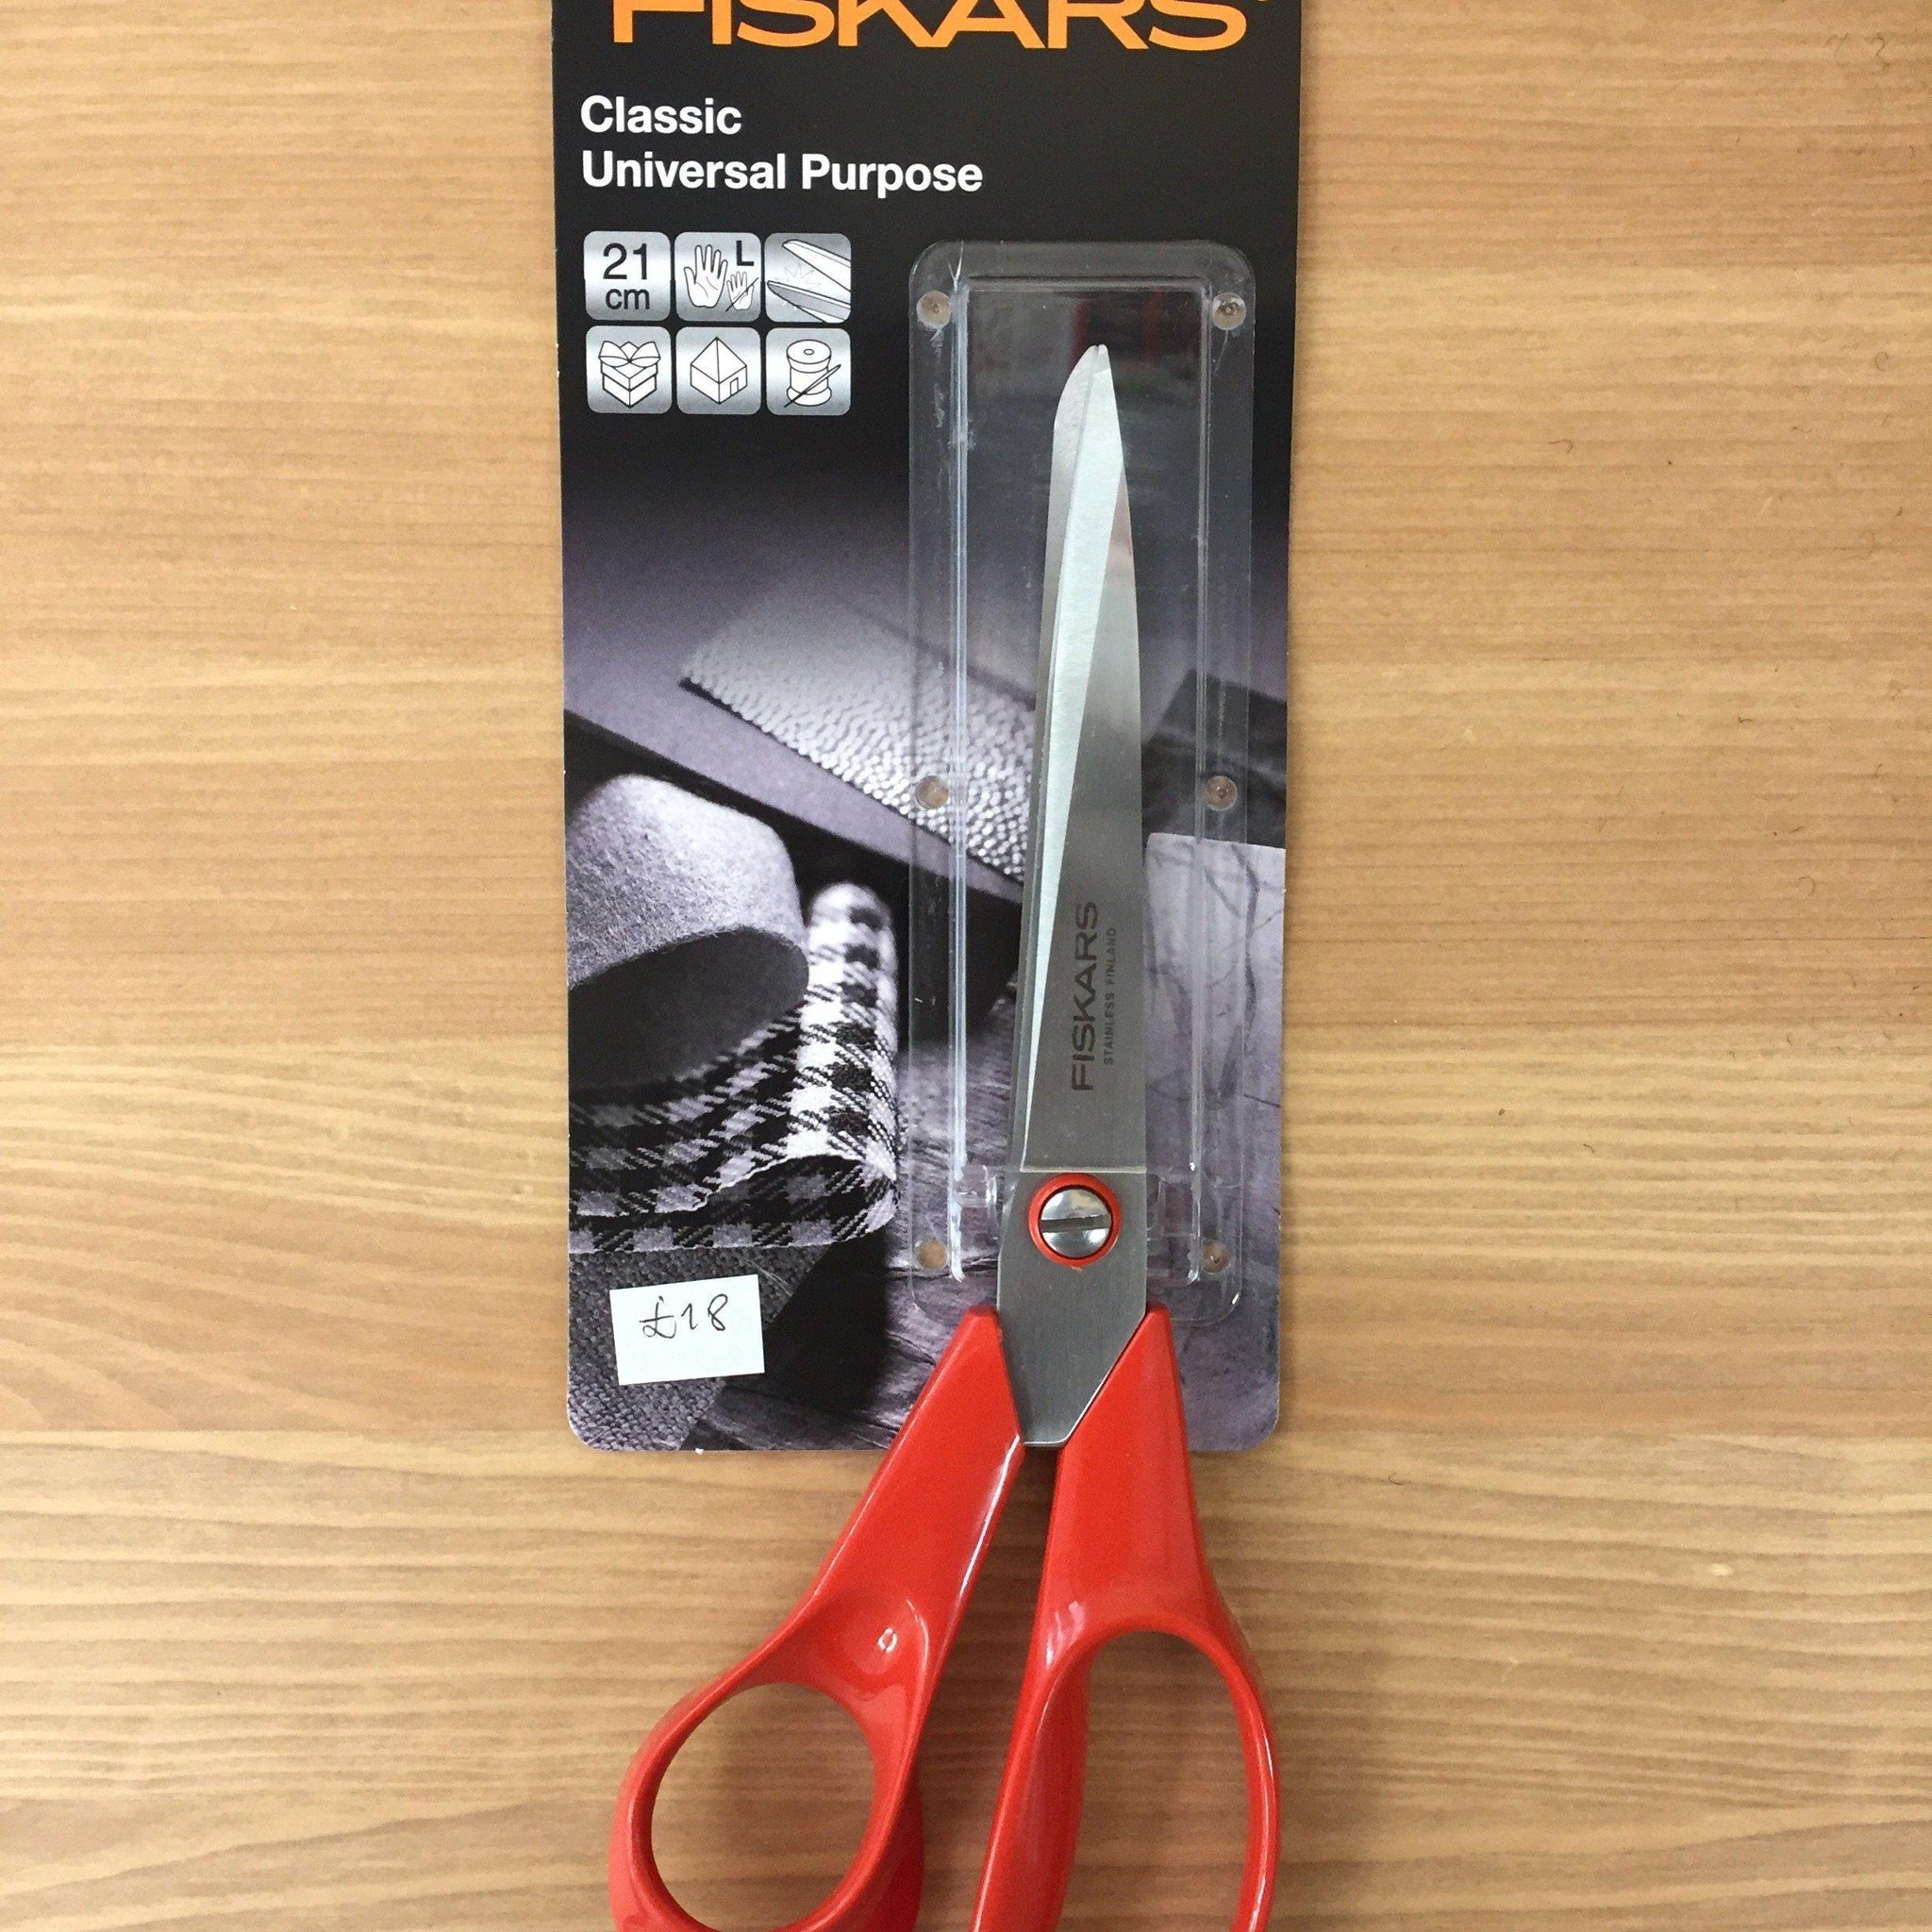 Fiskars Classic Universal Purpose Scissors 21 cm Fiskars Measuring Tools and Cutting - Fabric Mouse